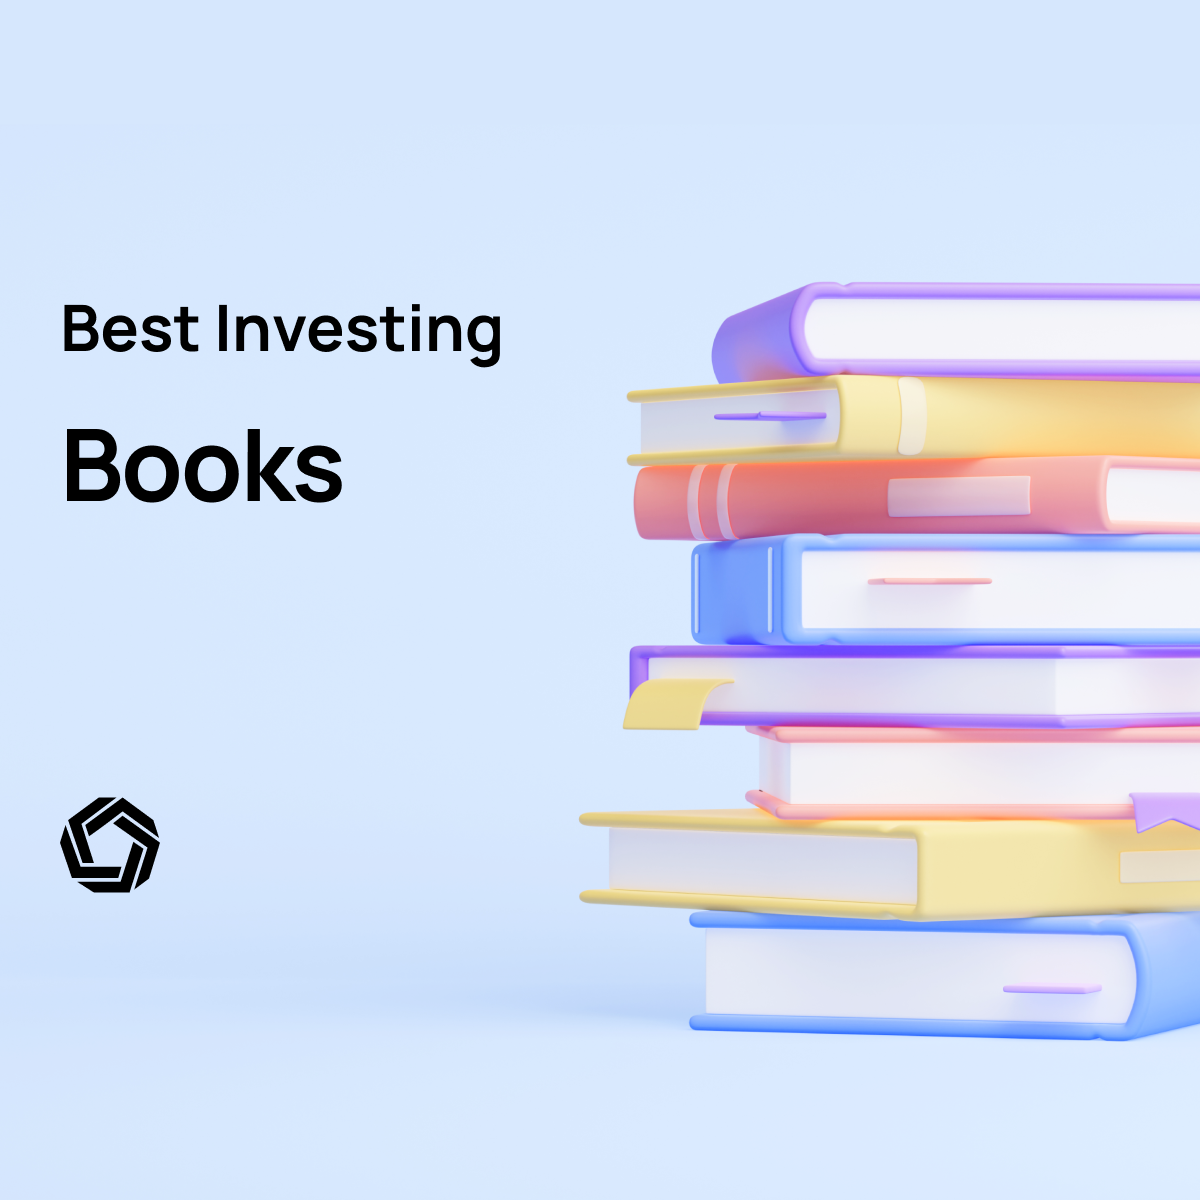 Best Investing Books